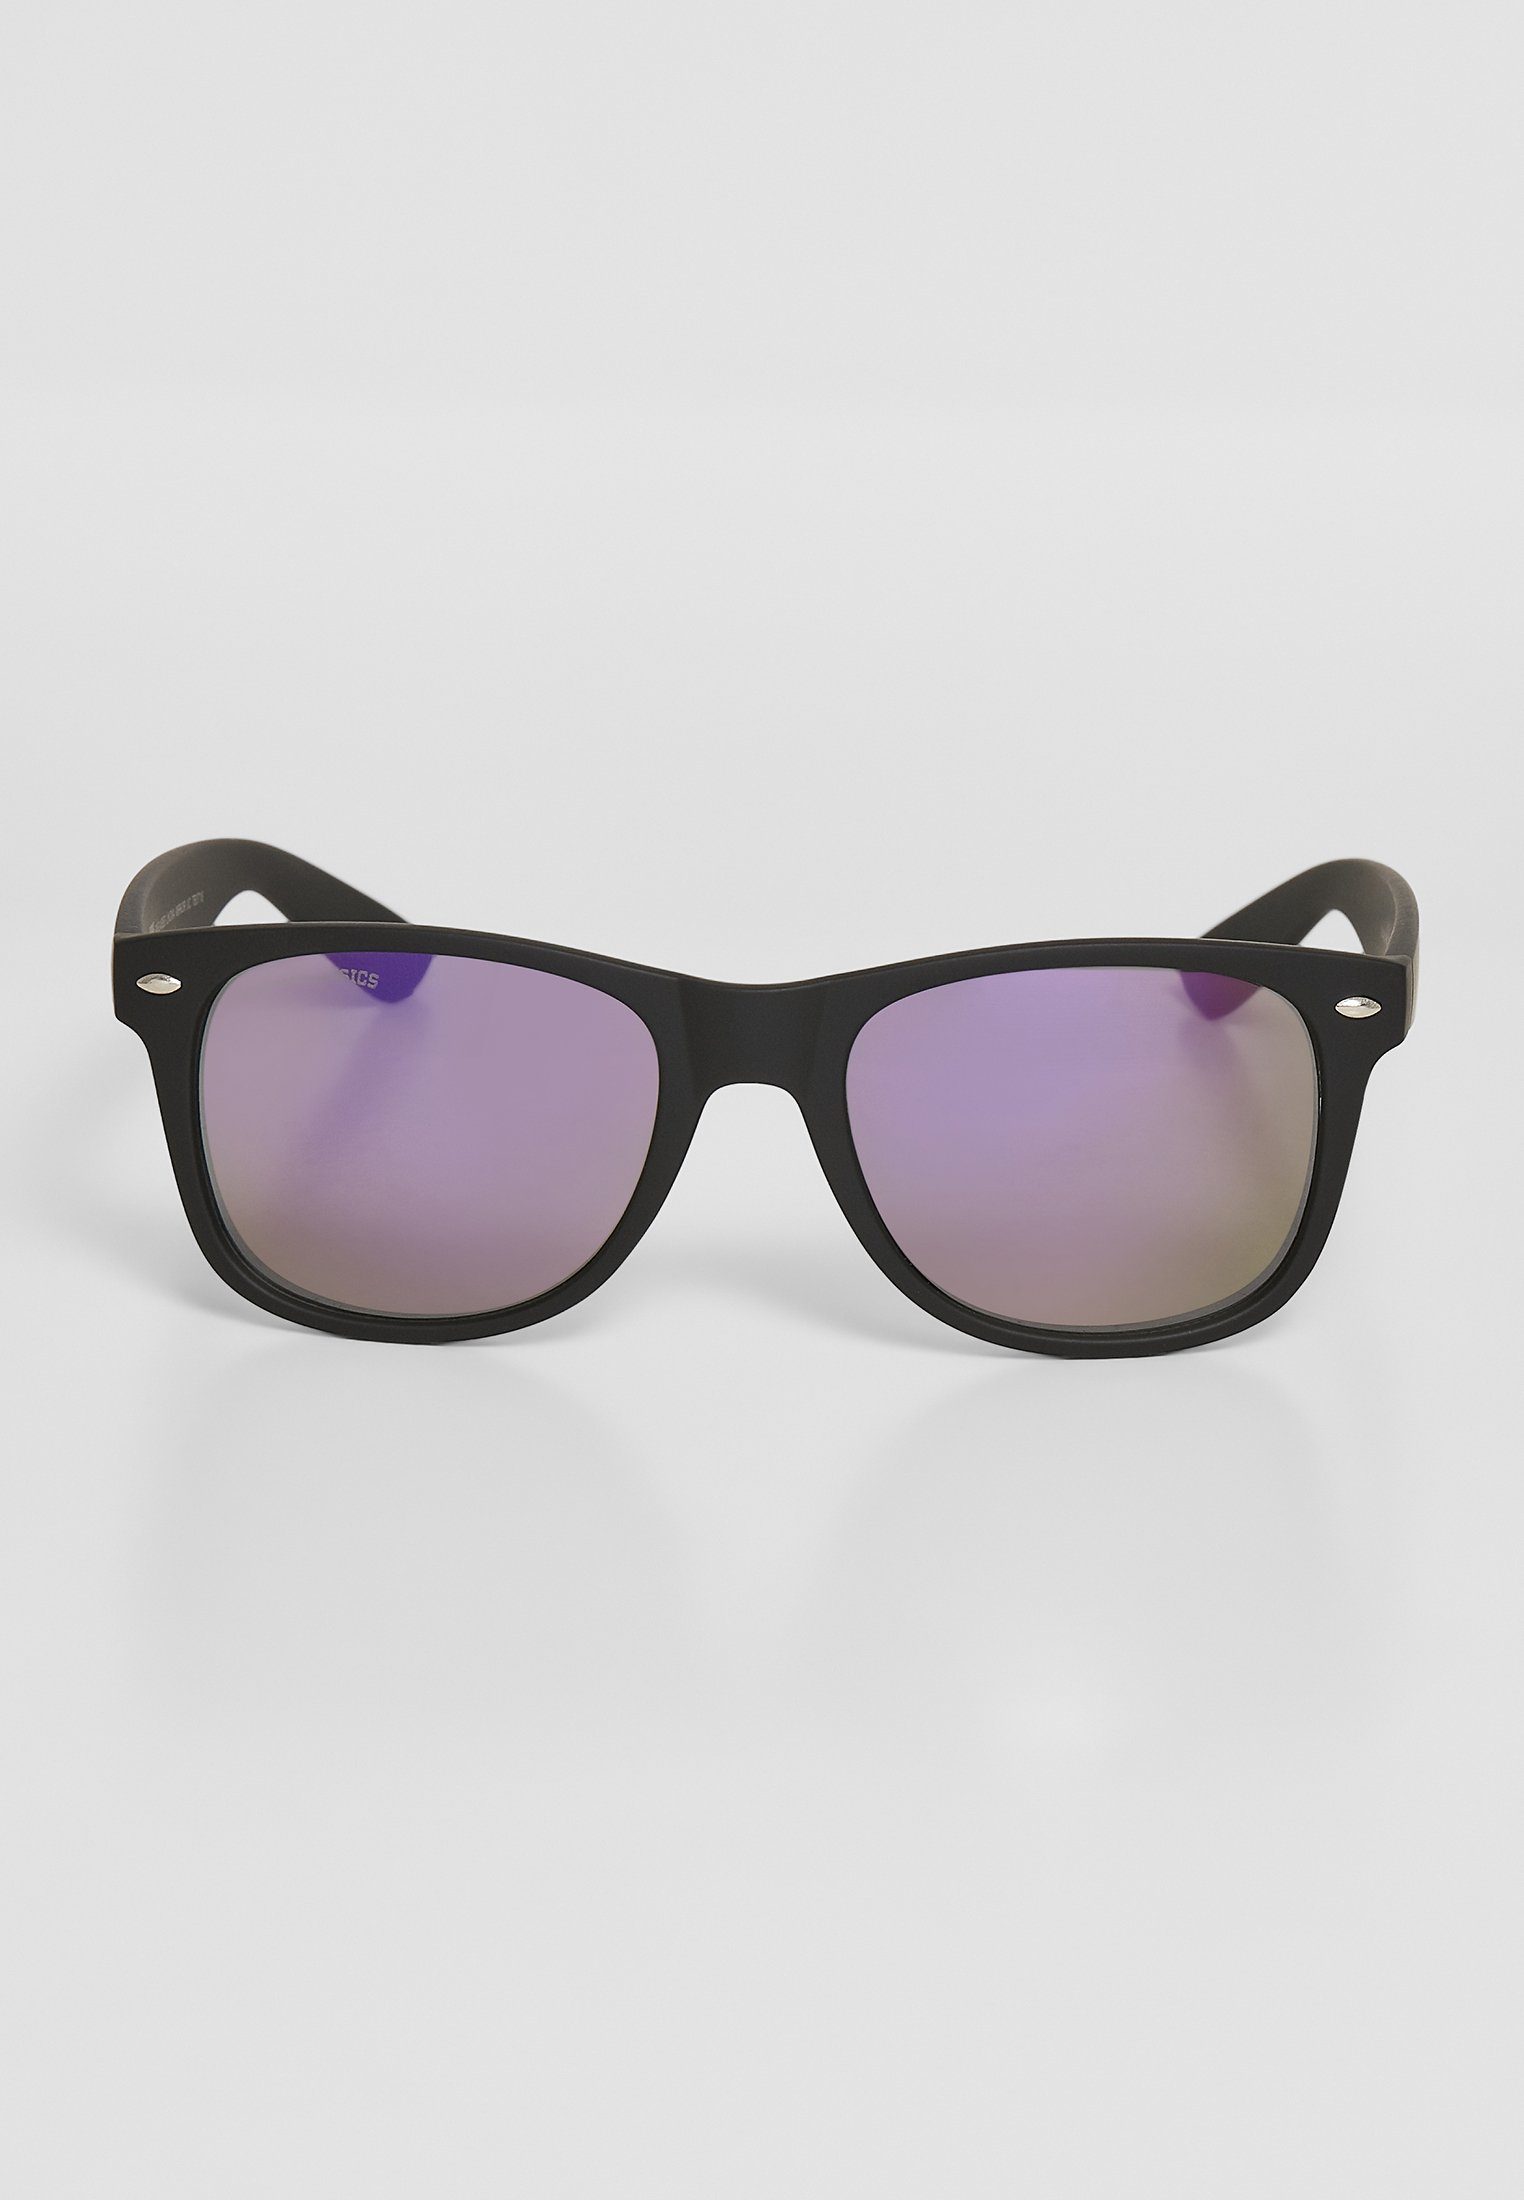 CLASSICS Mirror UC black/purple Sunglasses Sonnenbrille URBAN Accessoires Likoma